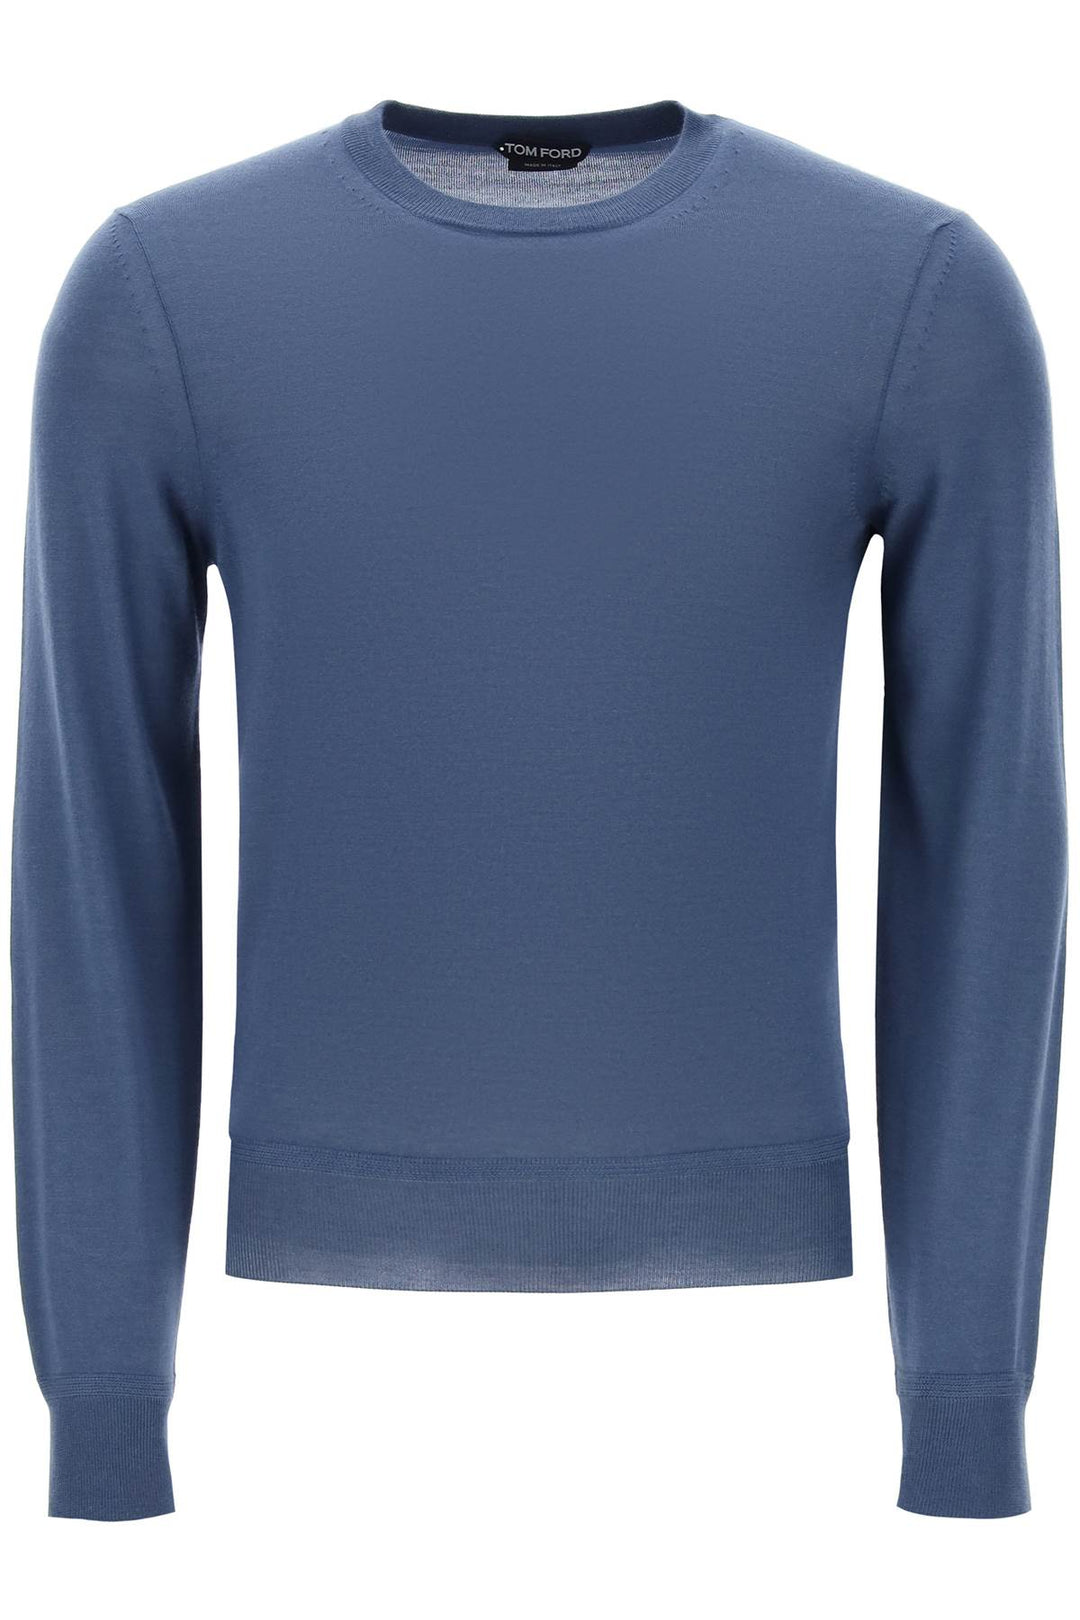 Tom Ford Light Silk Cashmere Sweater   Blu